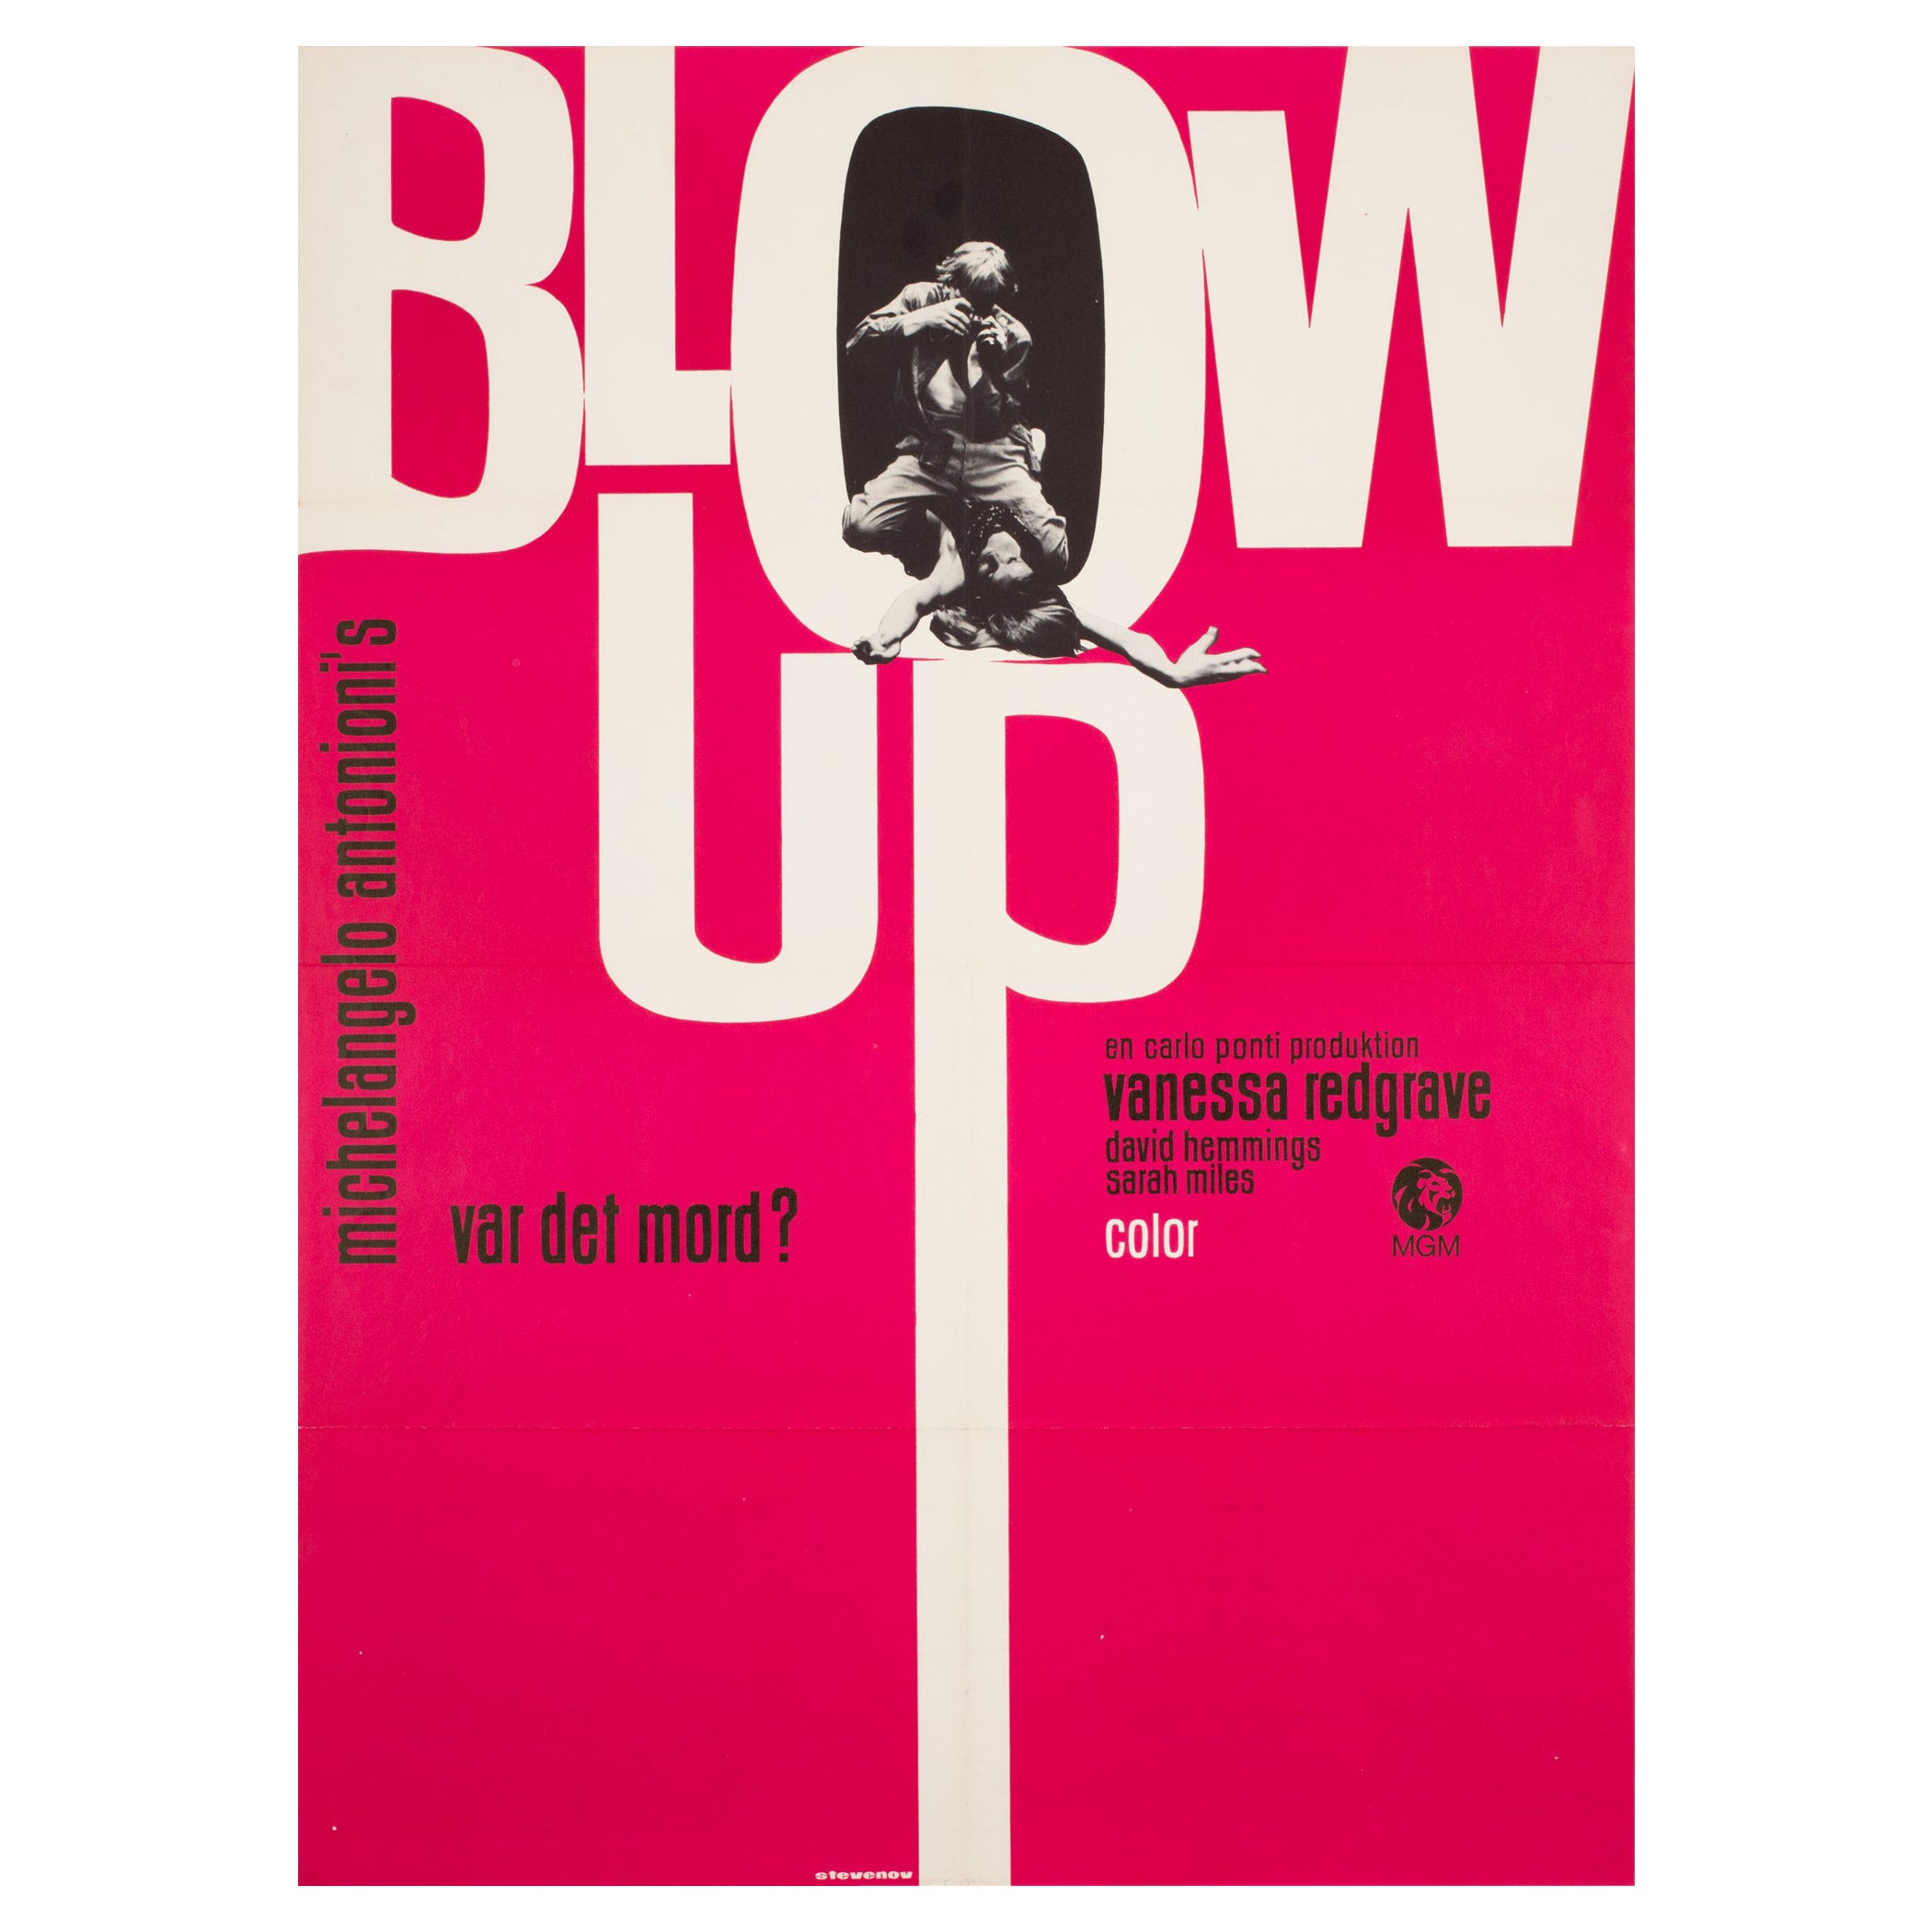 Dänisches Filmplakat „Blow-up“, Stevenov, 1967